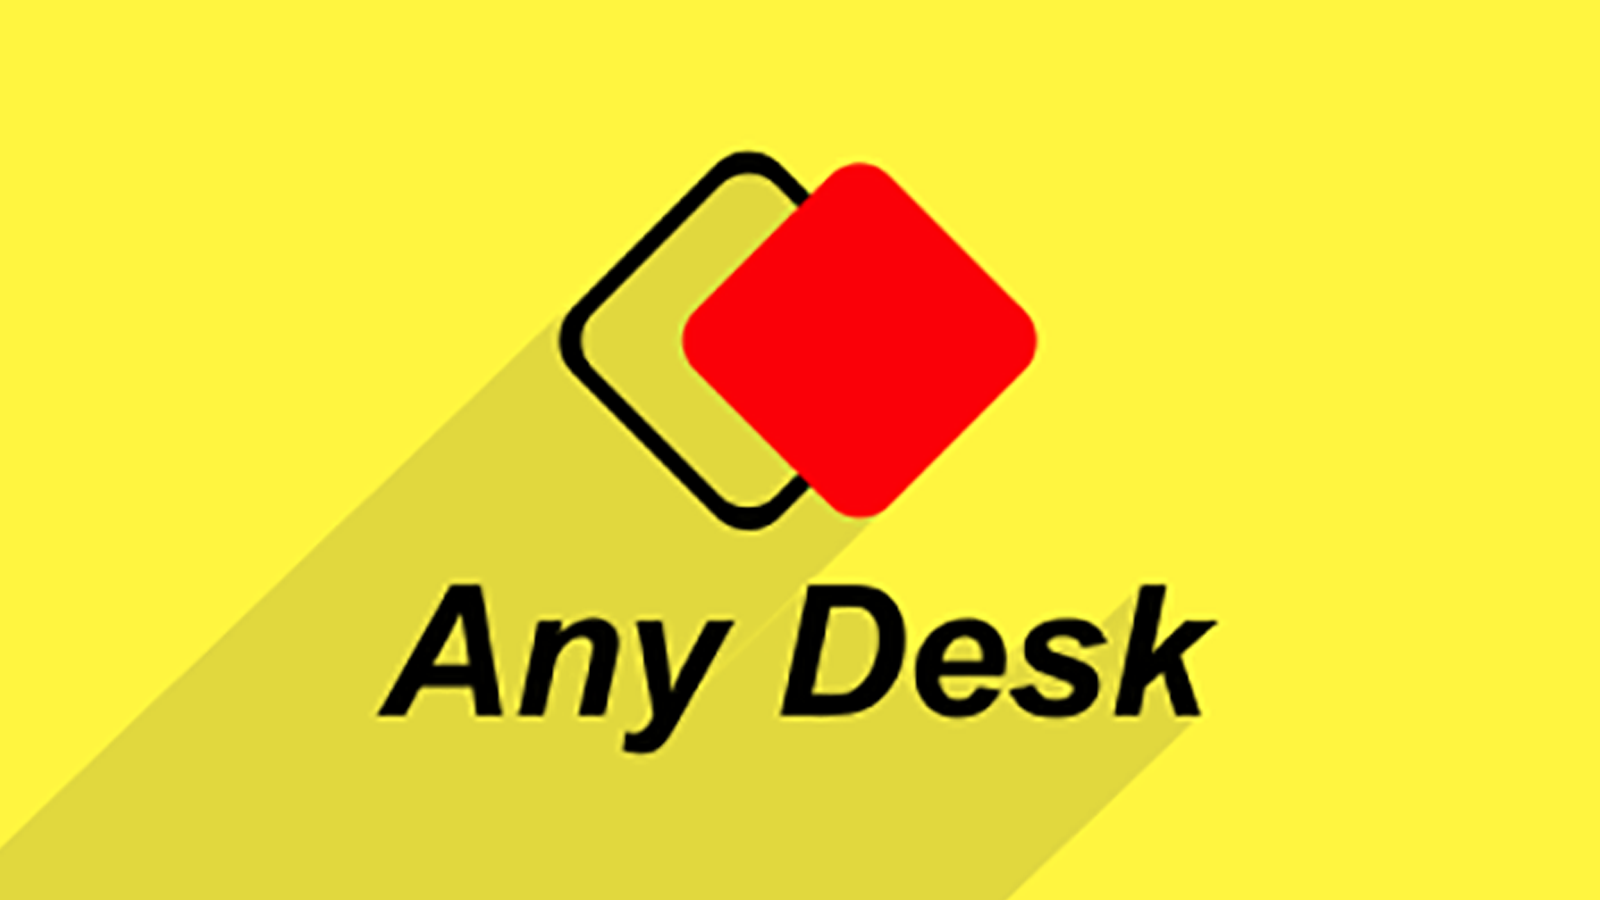 Anydesk logo - daserpatient